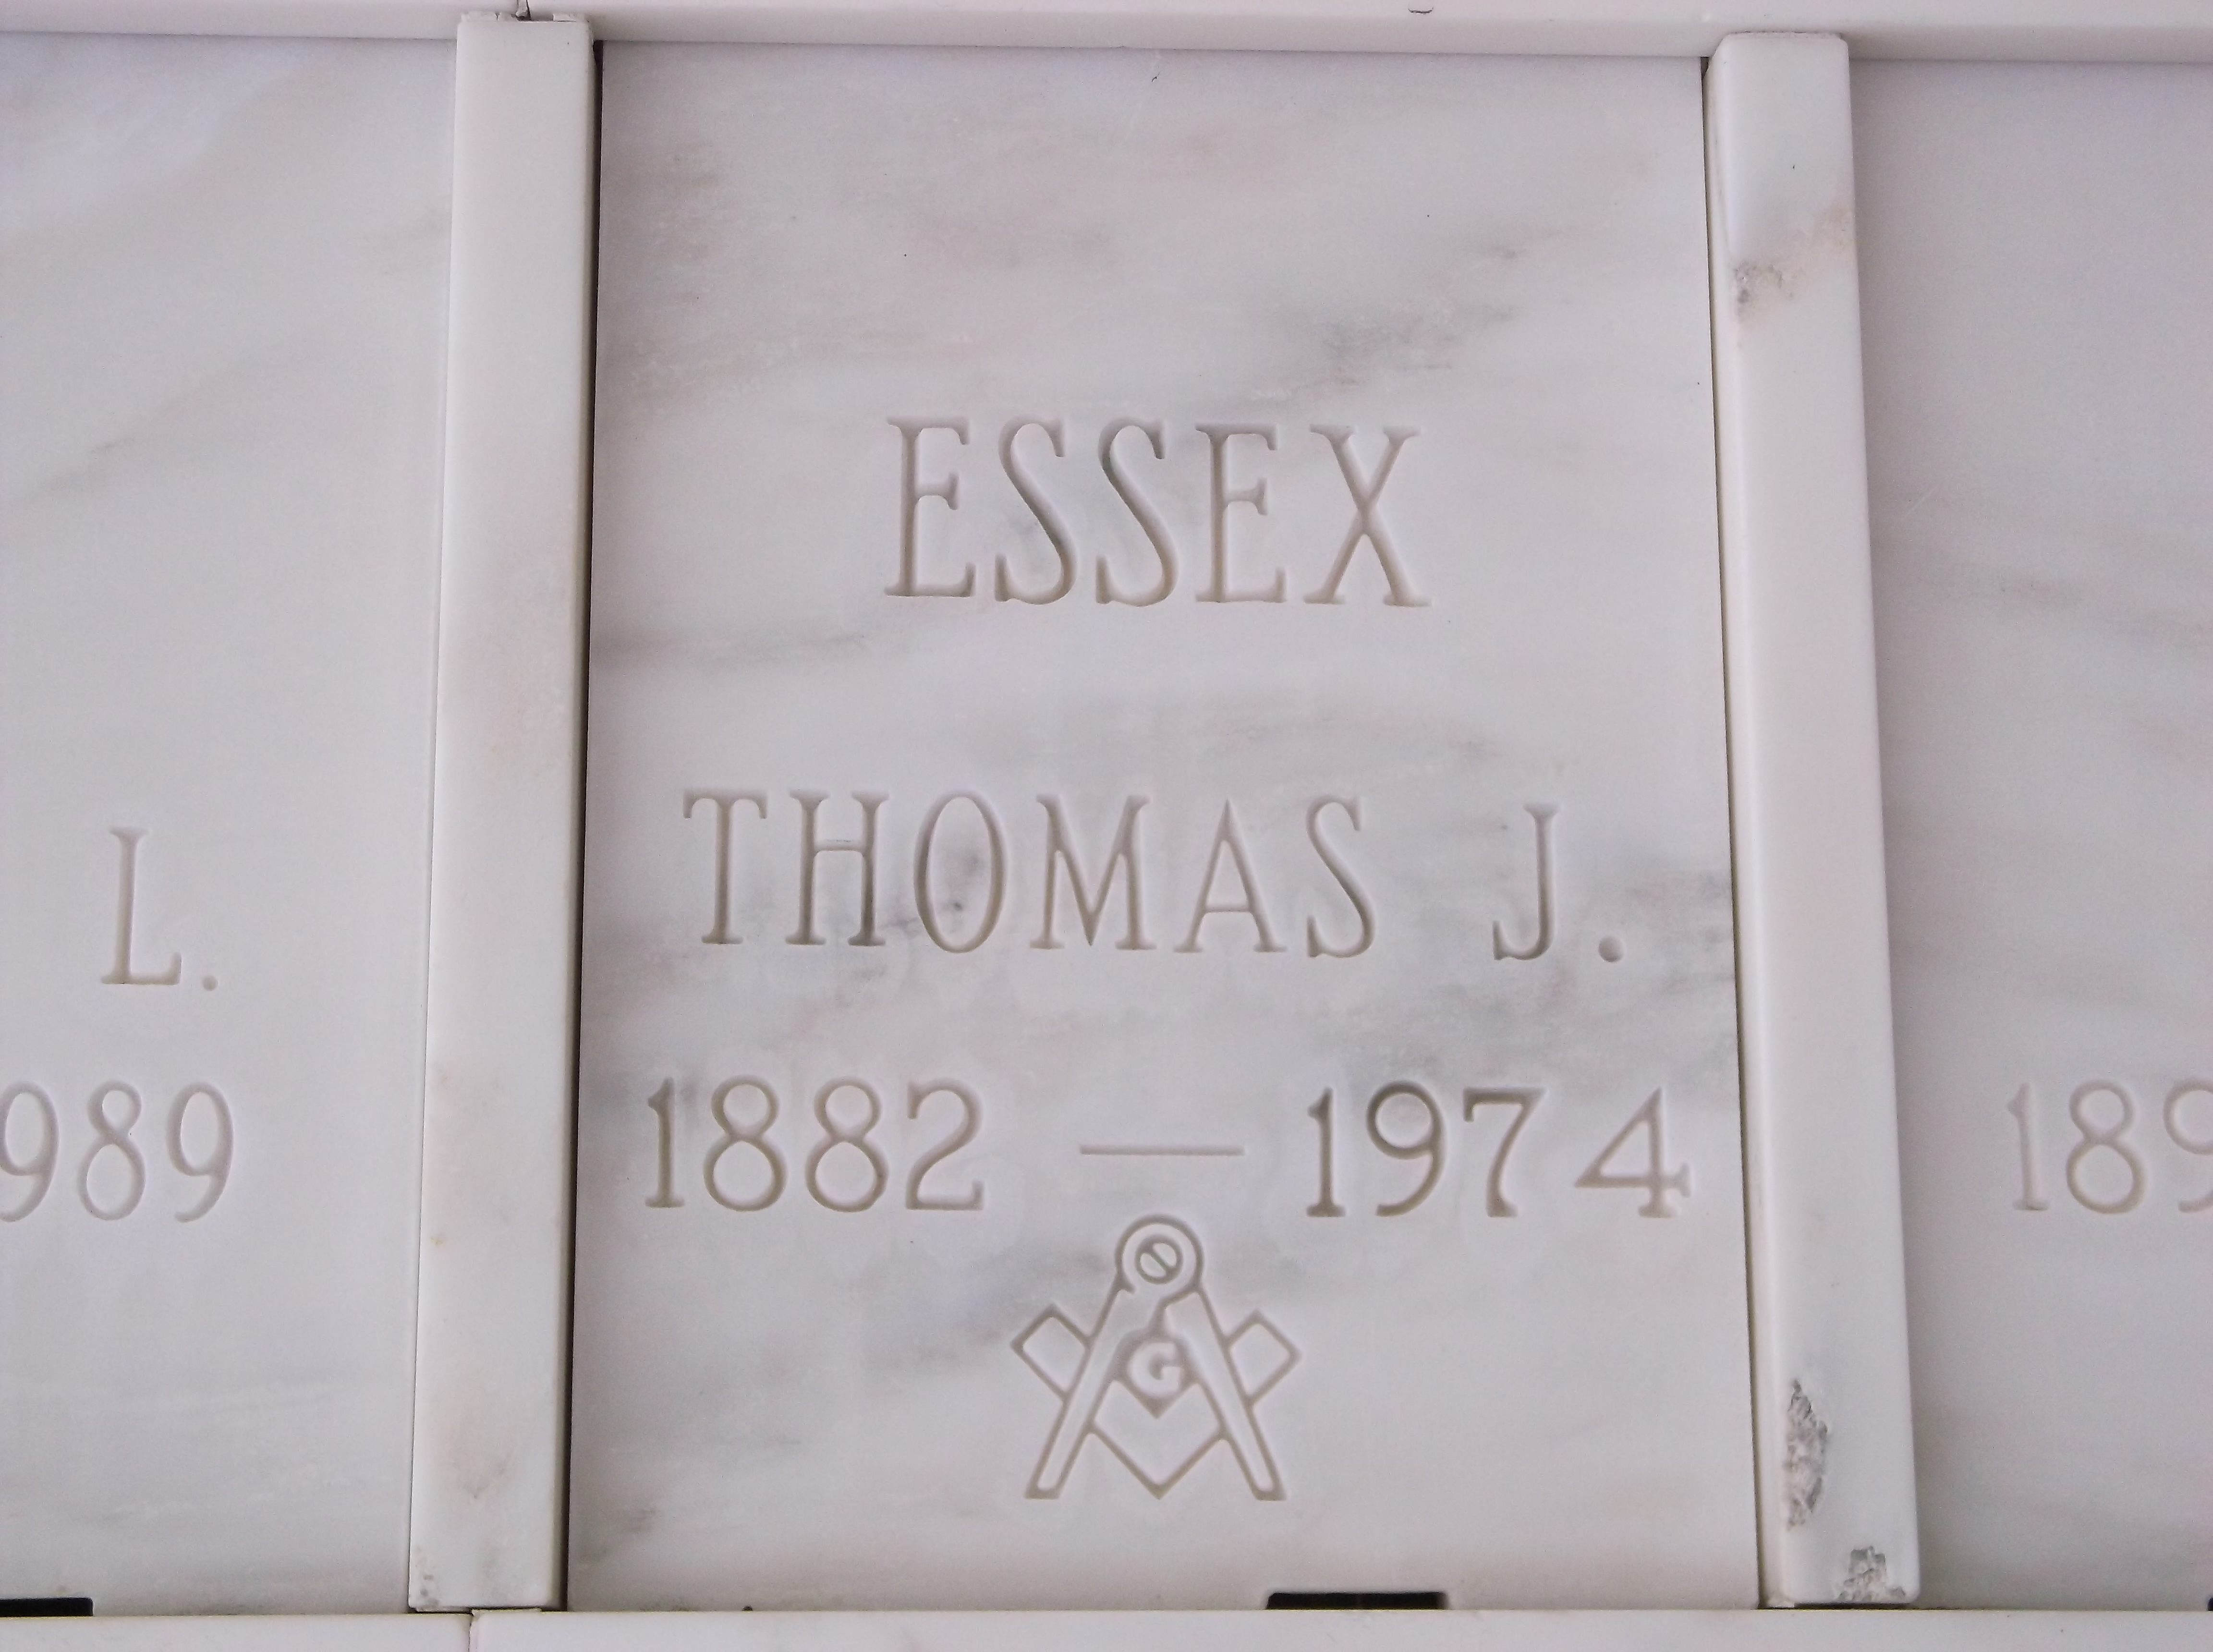 Thomas J Essex